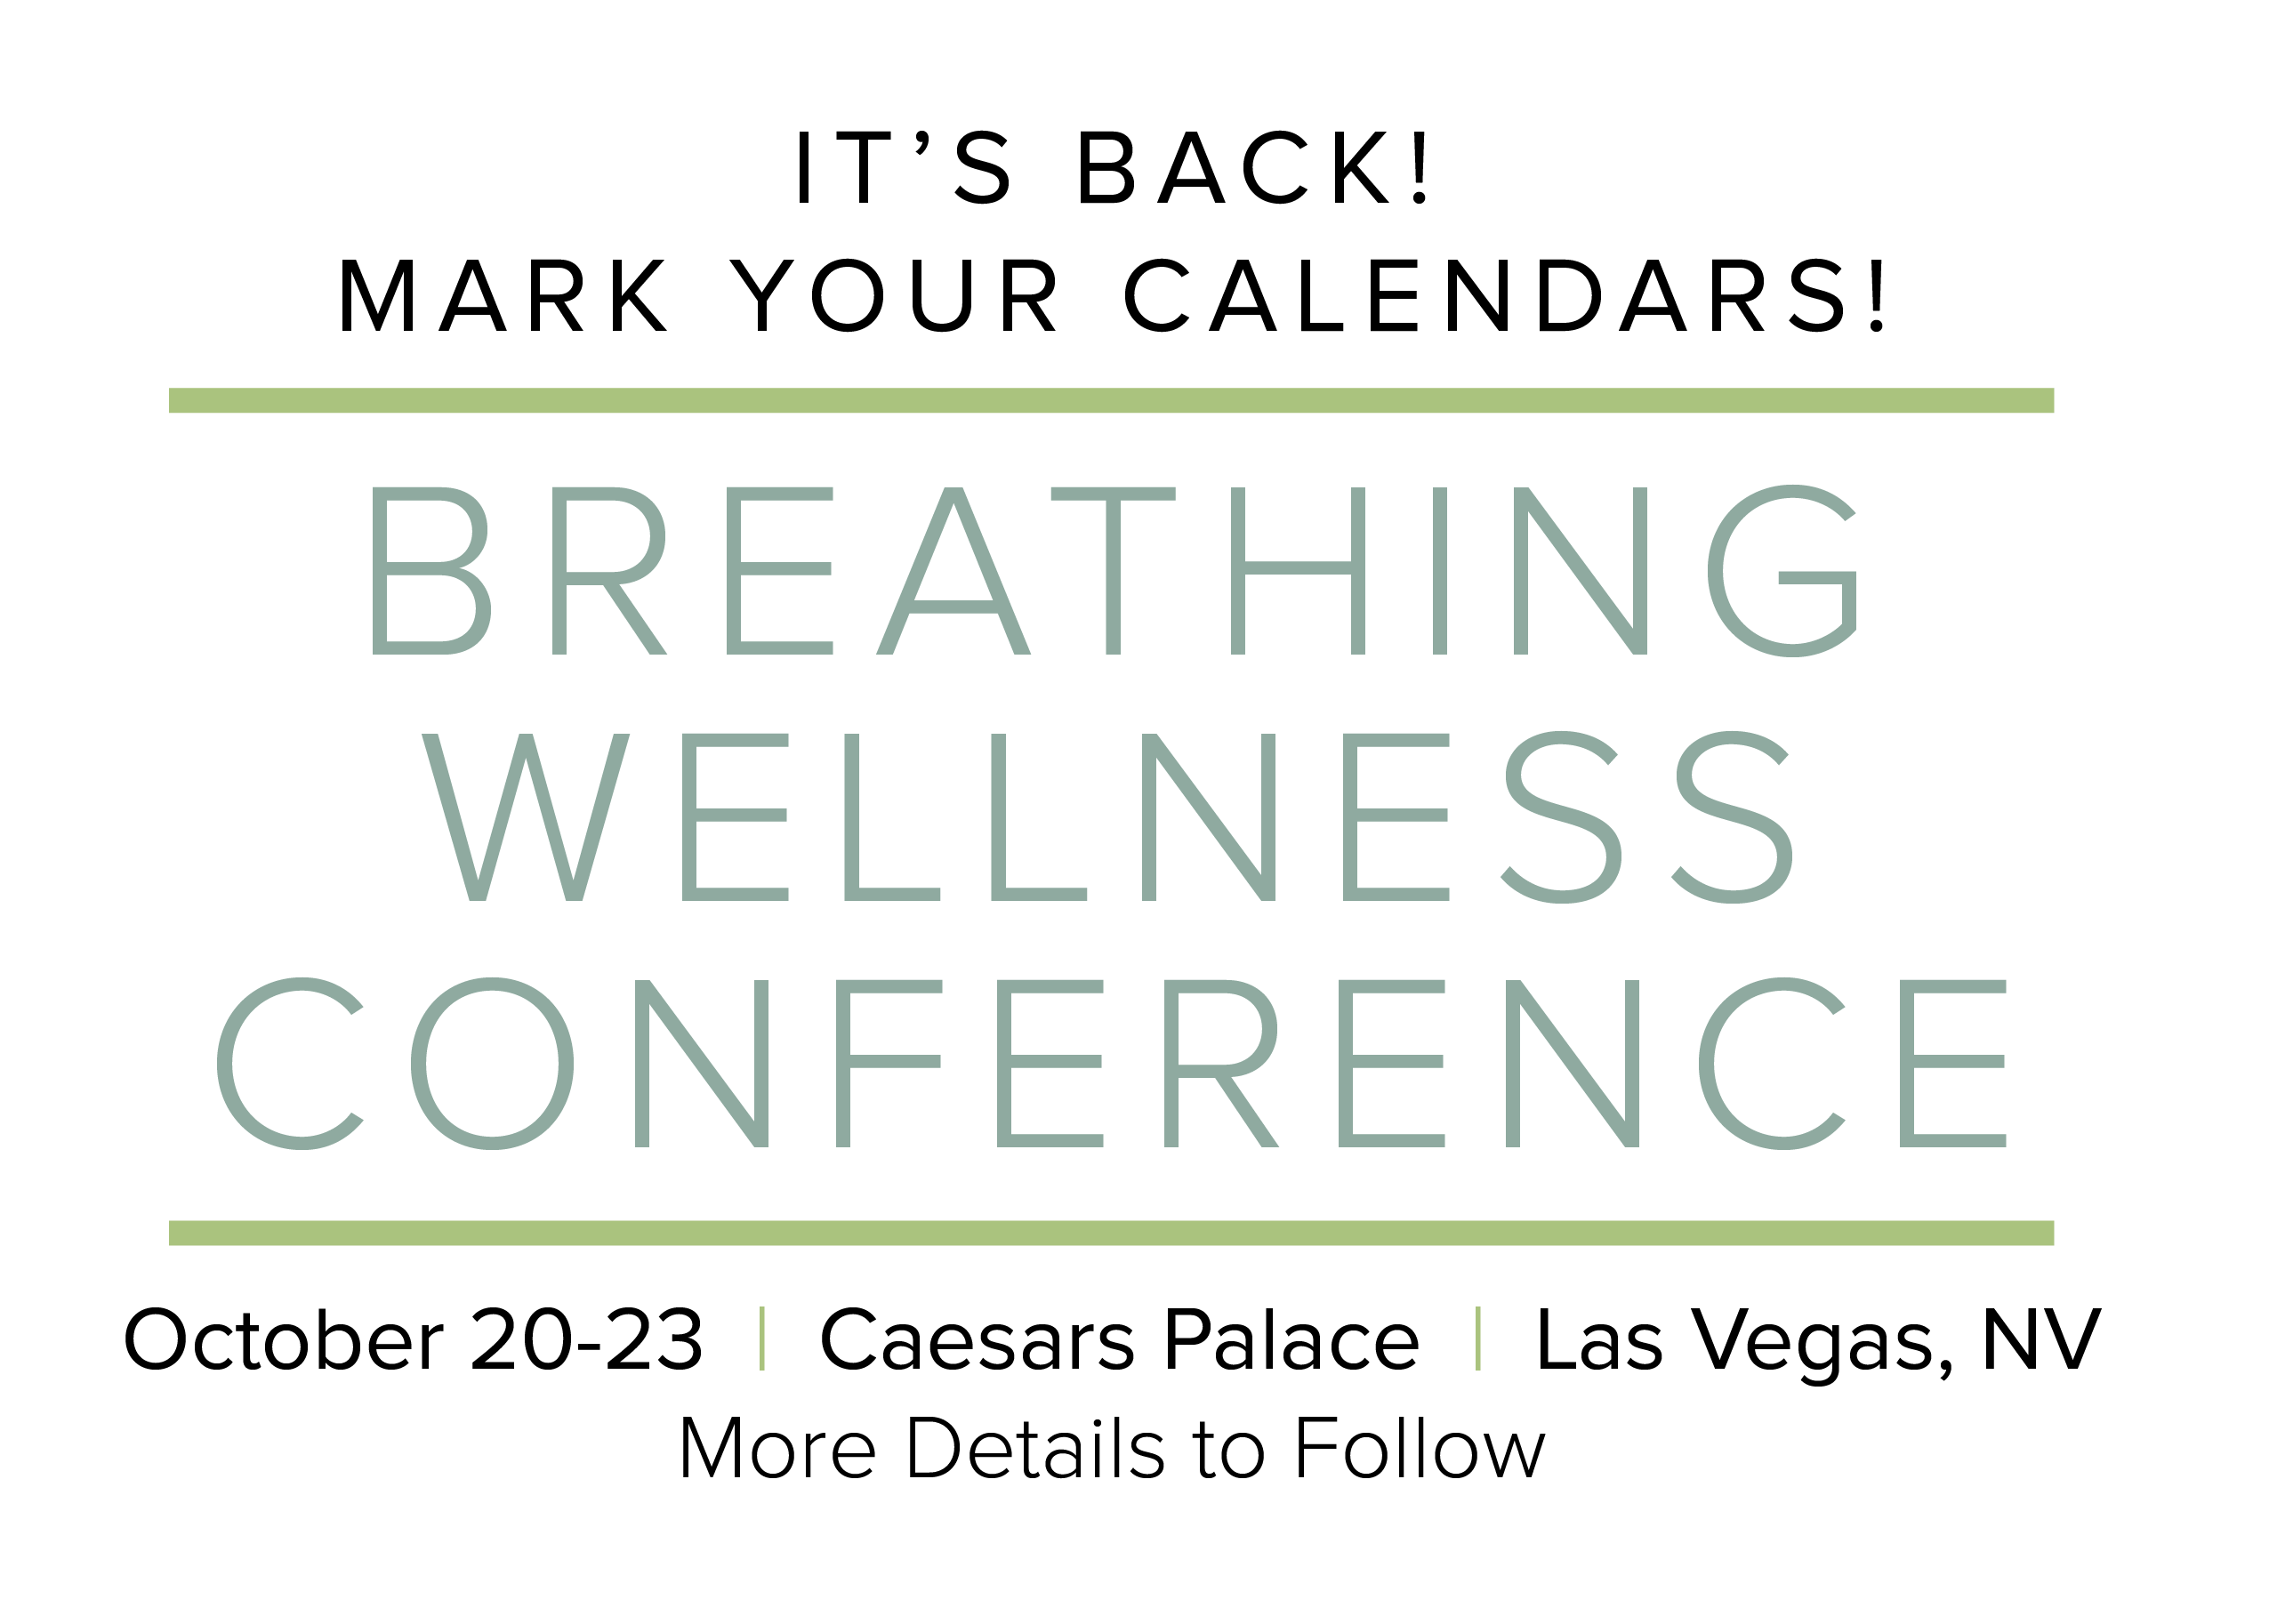 Breathing Wellness Conference October 20-23, Caesars Palace, Las Vegas